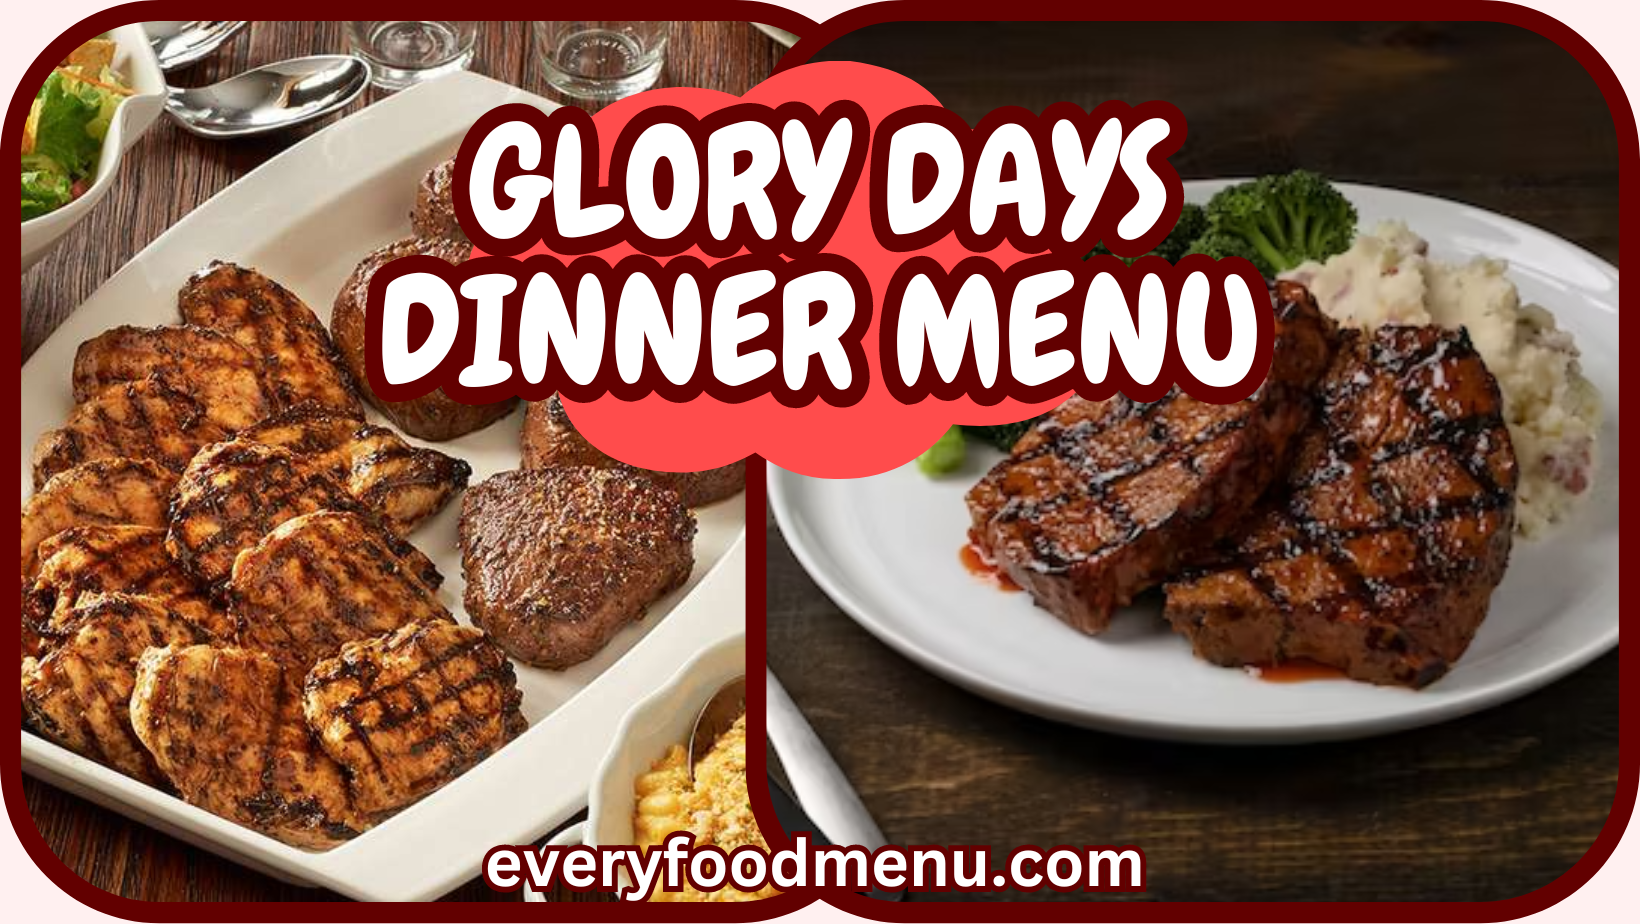 GLORY DAYS DINNER MENU